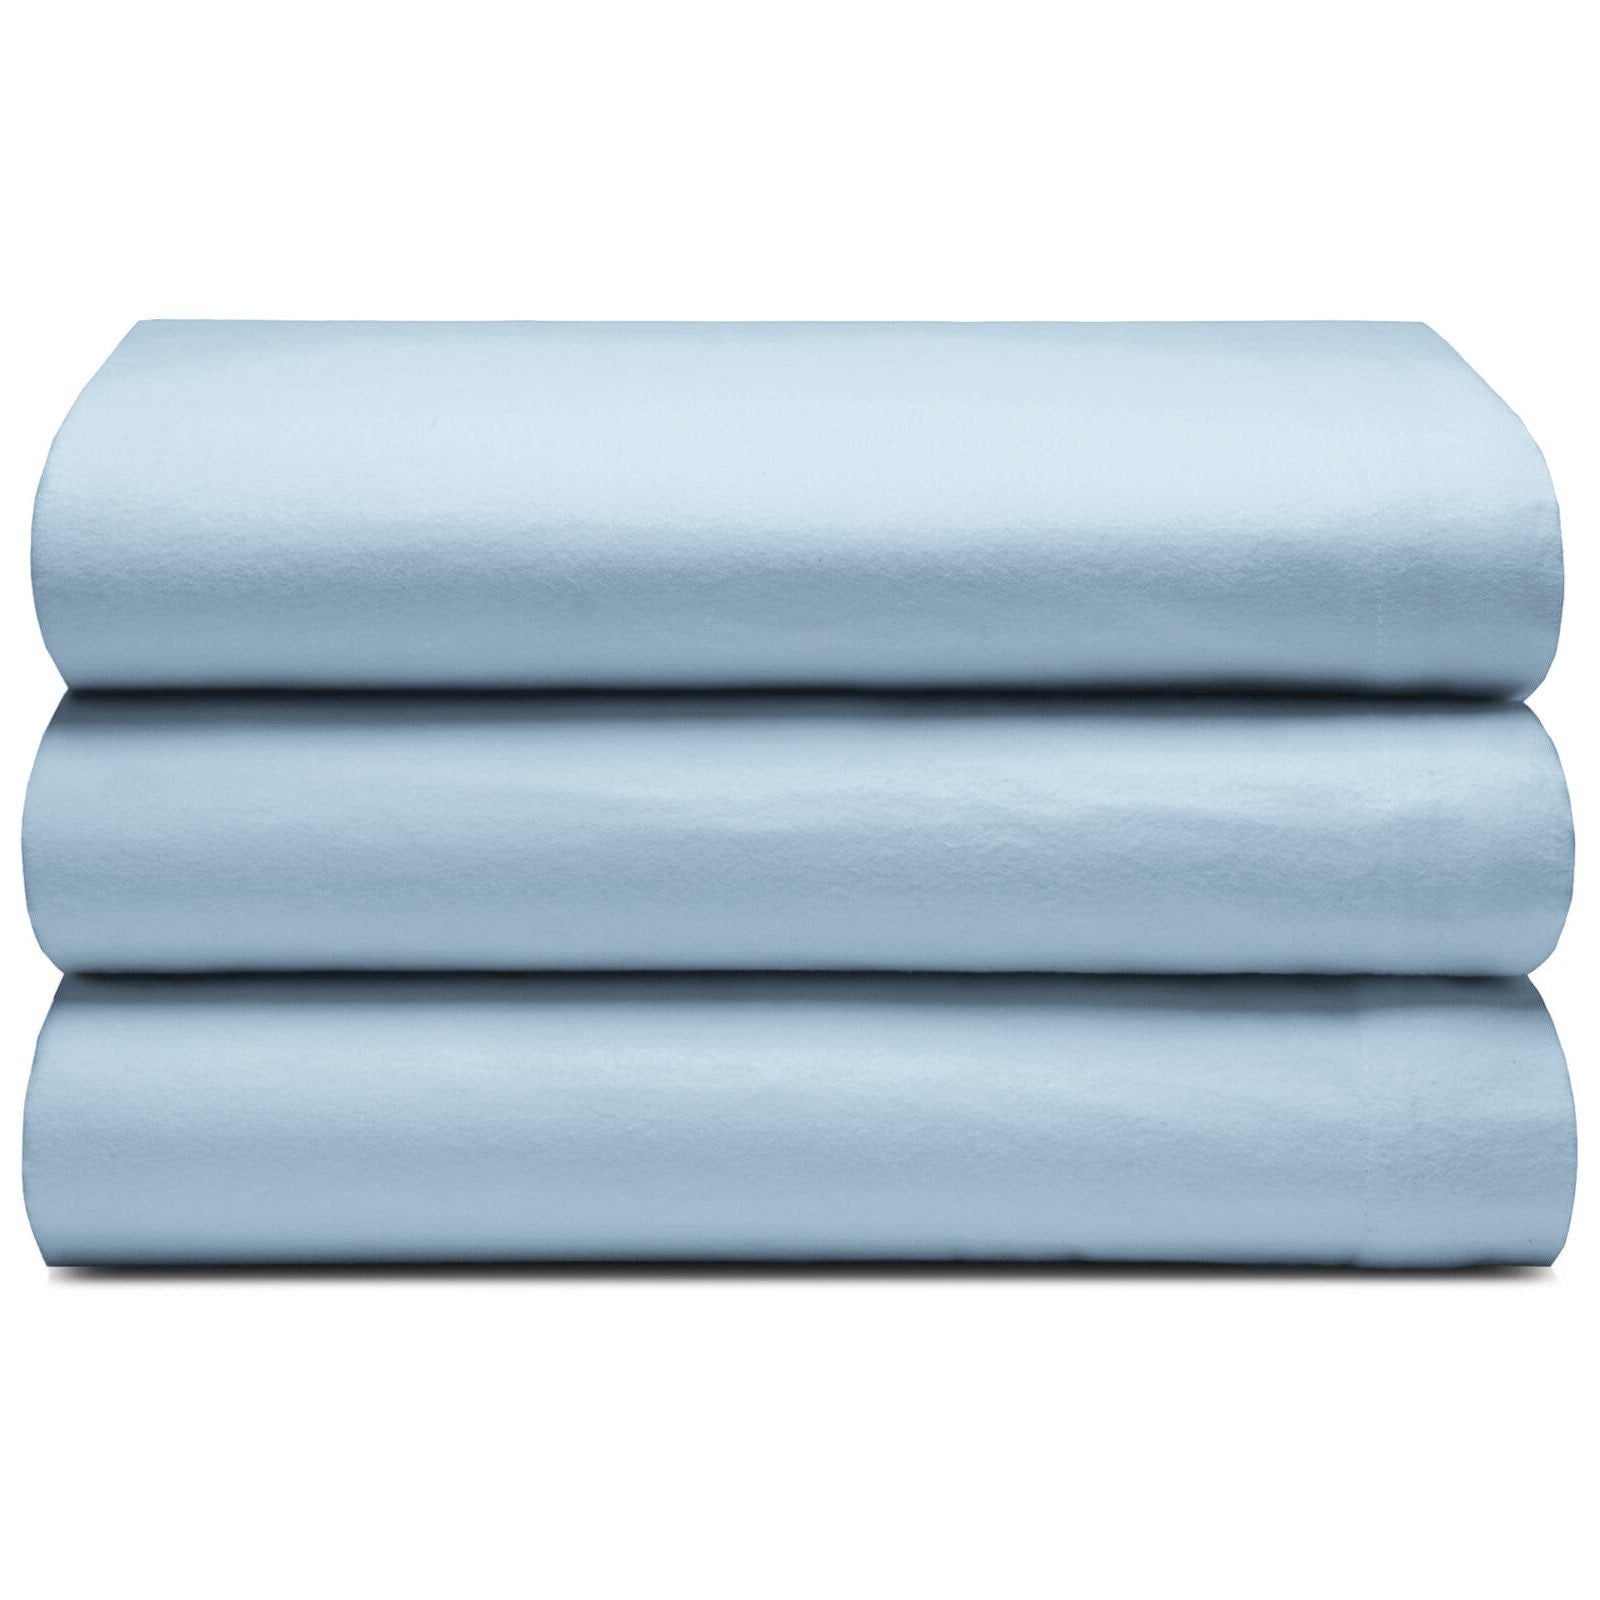 Riggs Premier Flannelette Brushed Cotton Sheets - Blue